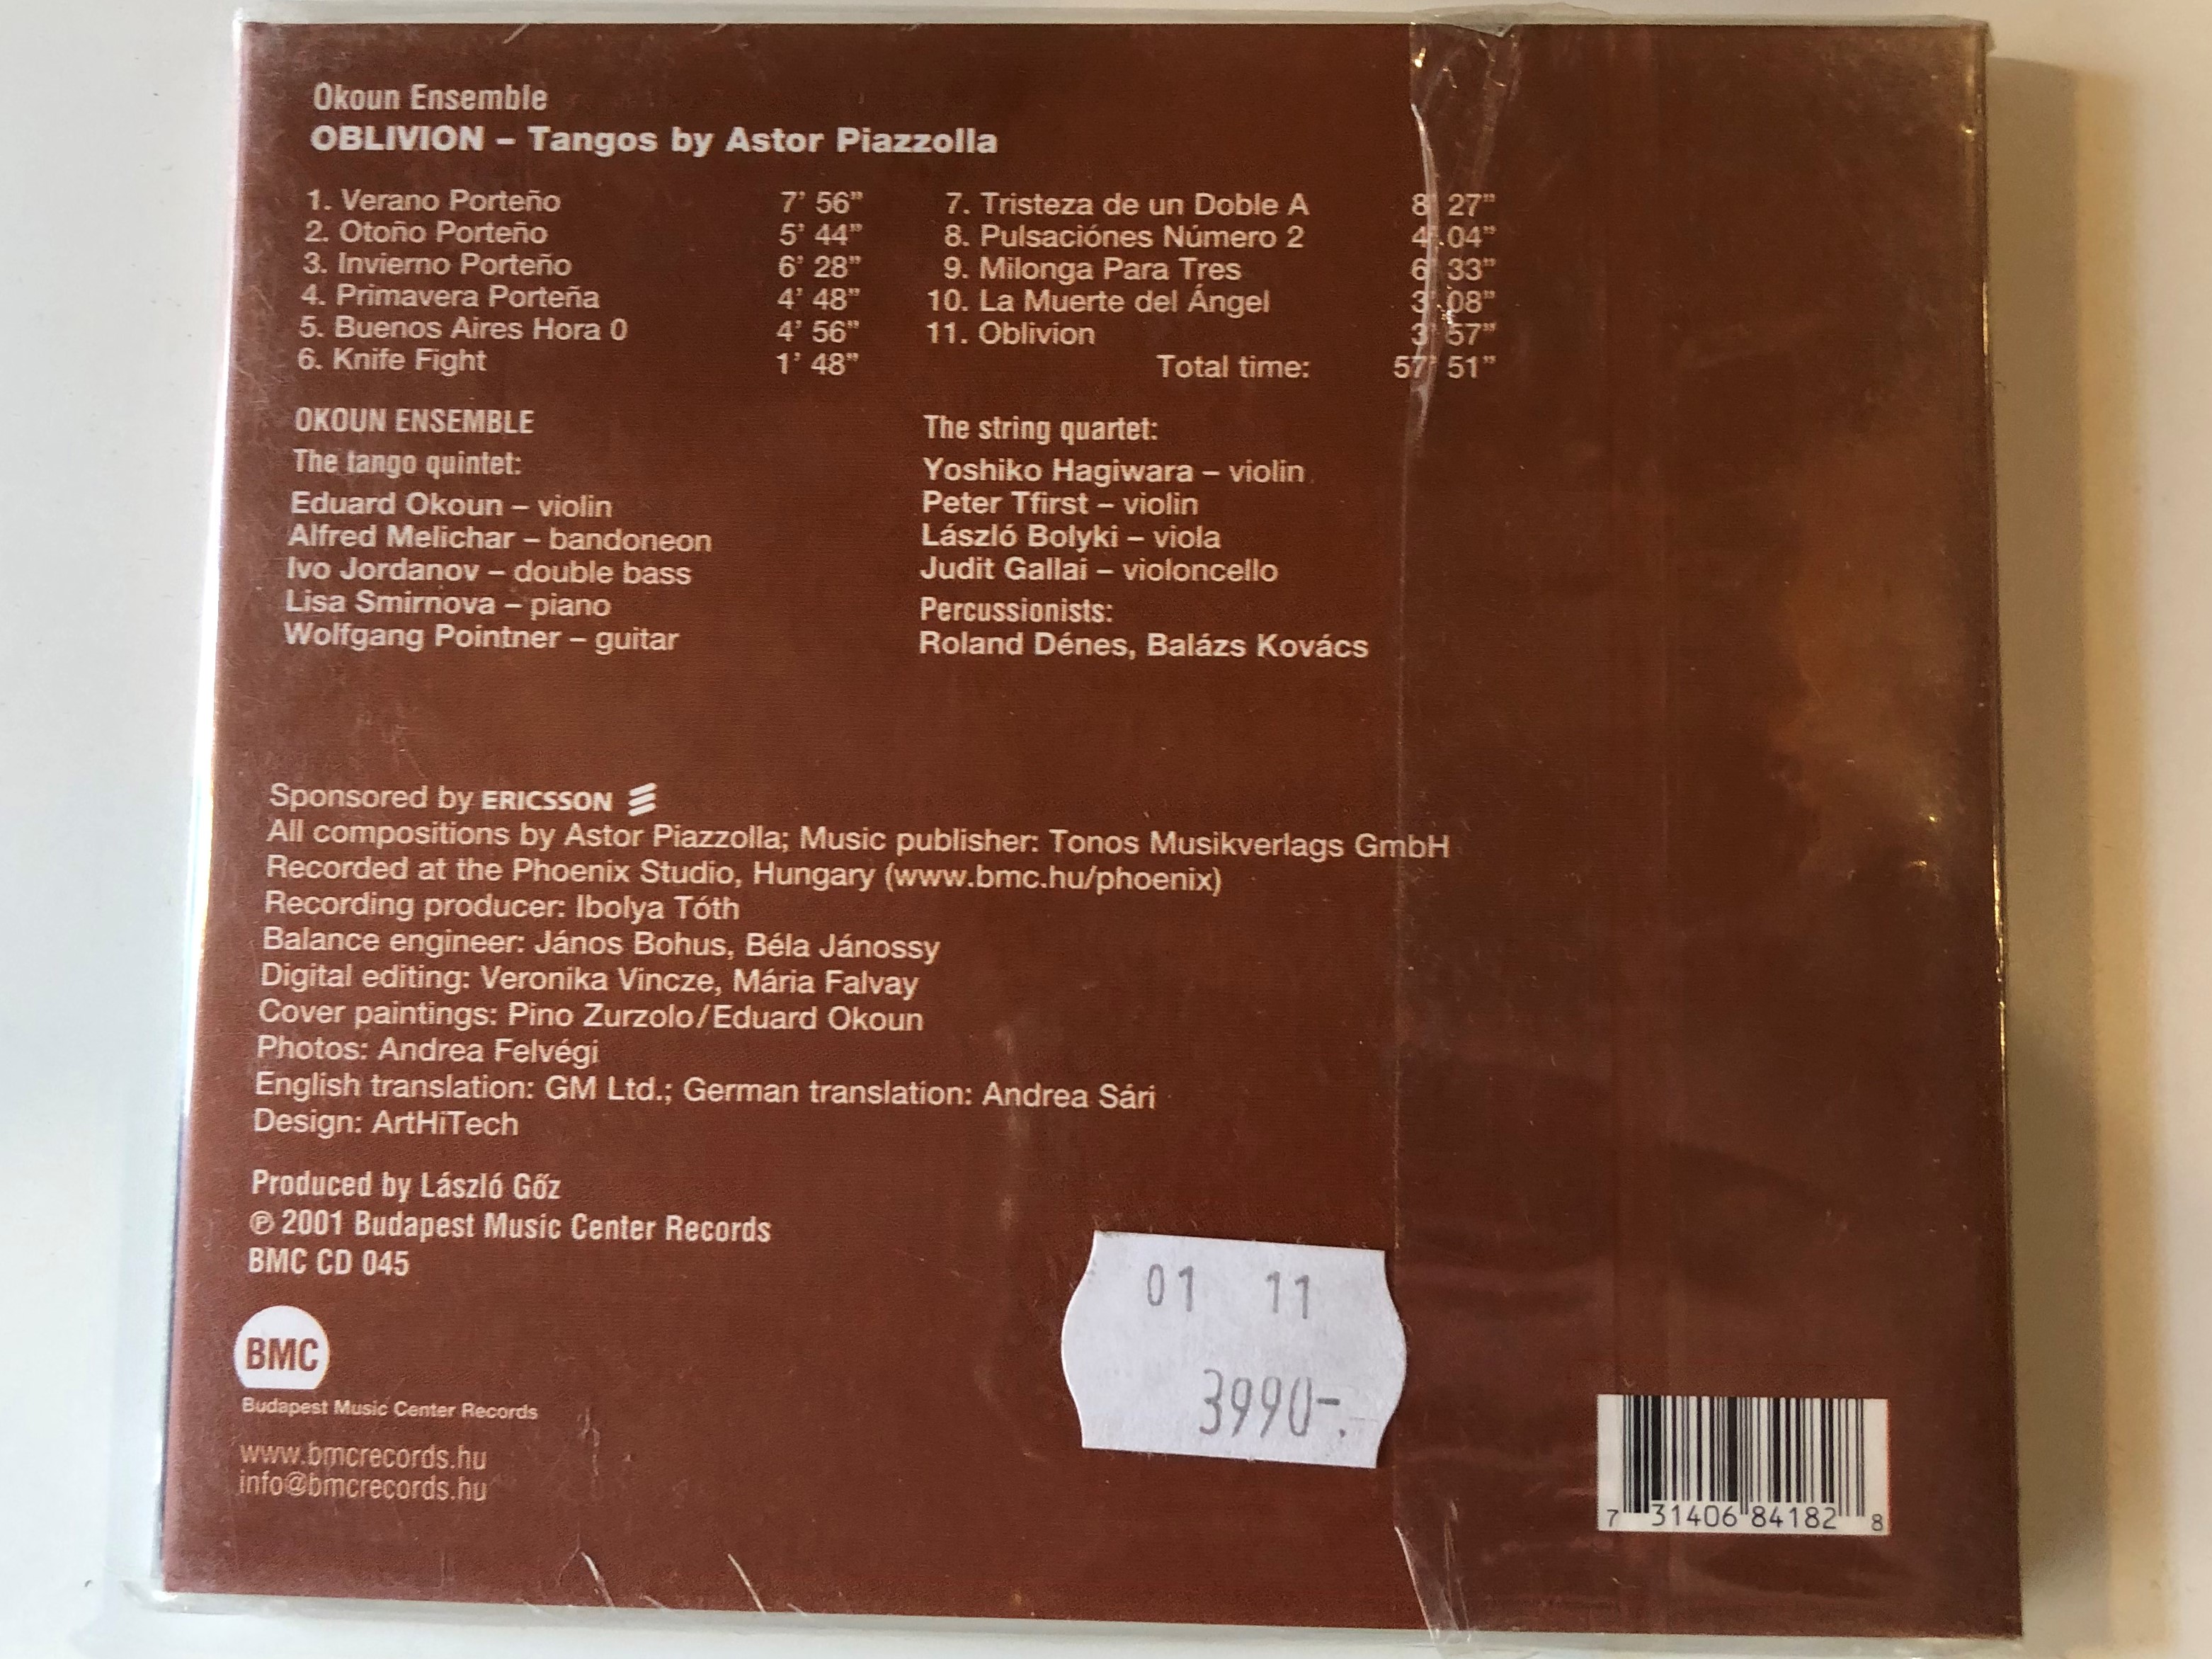 oblivion-tangos-by-astor-piazzolla-okoun-ensemble-budapest-music-center-records-audio-cd-2001-bmc-cd-045-2-.jpg